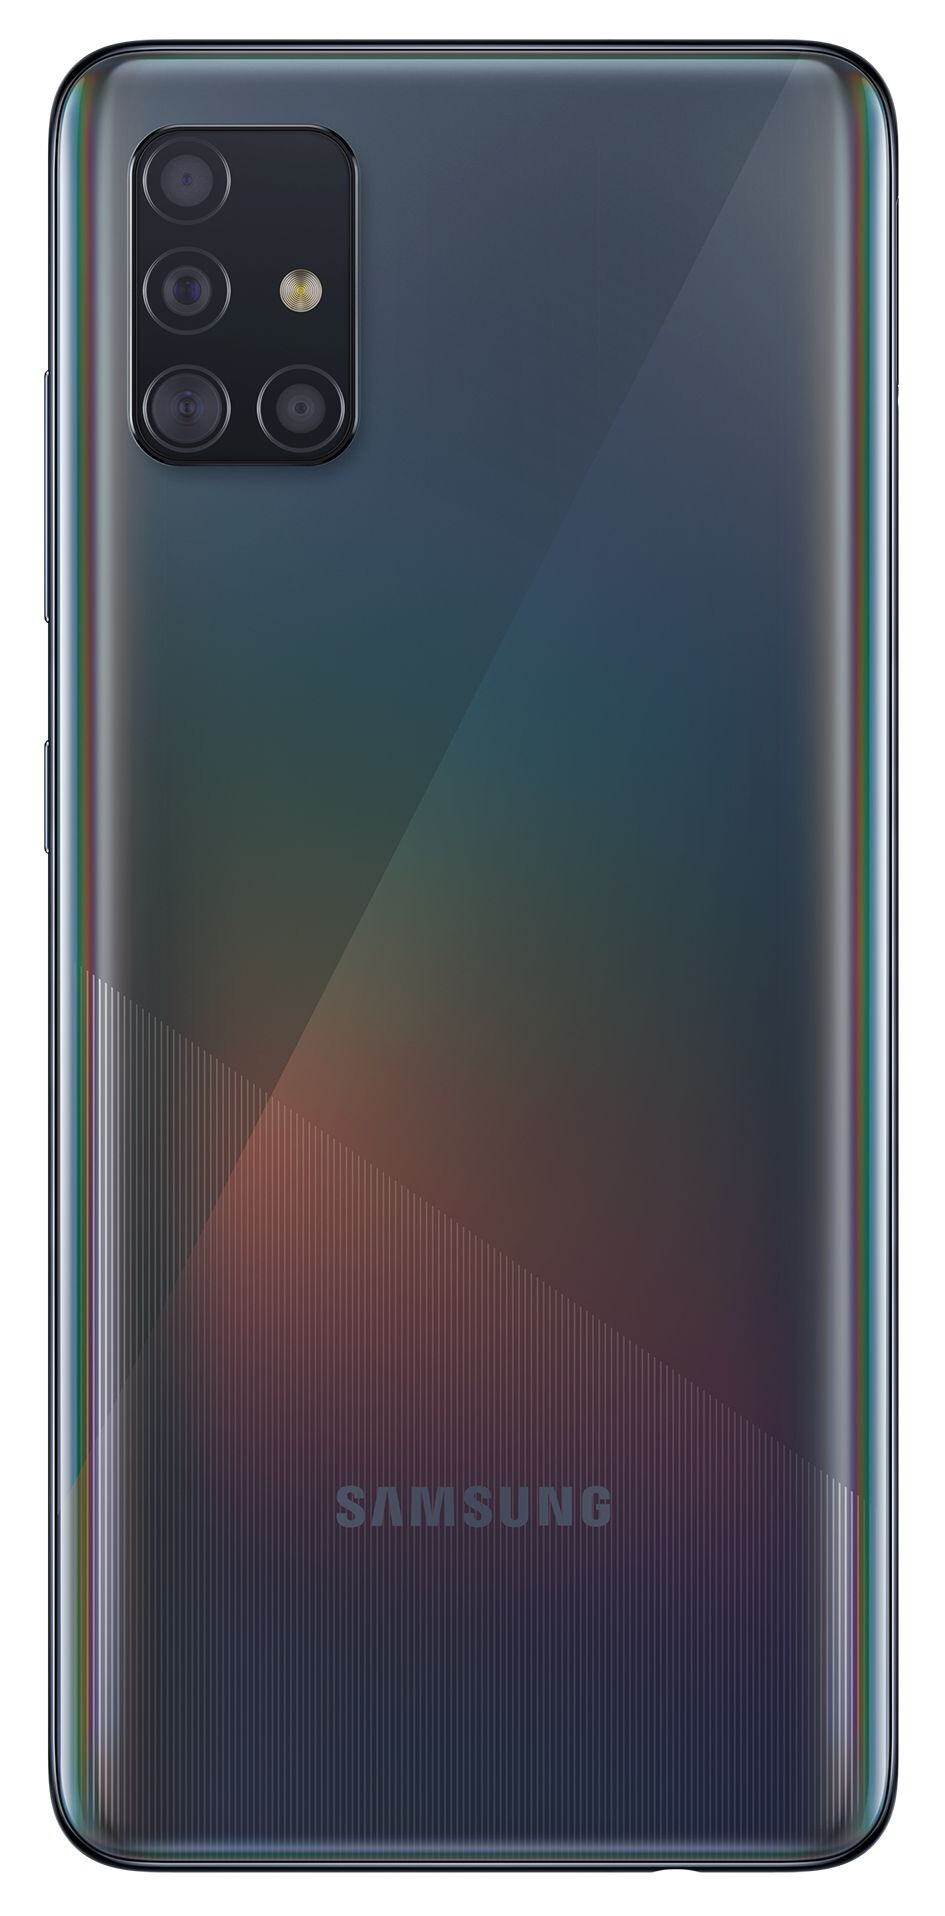 Смартфон Samsung Galaxy A51 6/128GB (ЕАС) Prism Crush Black (Черный)